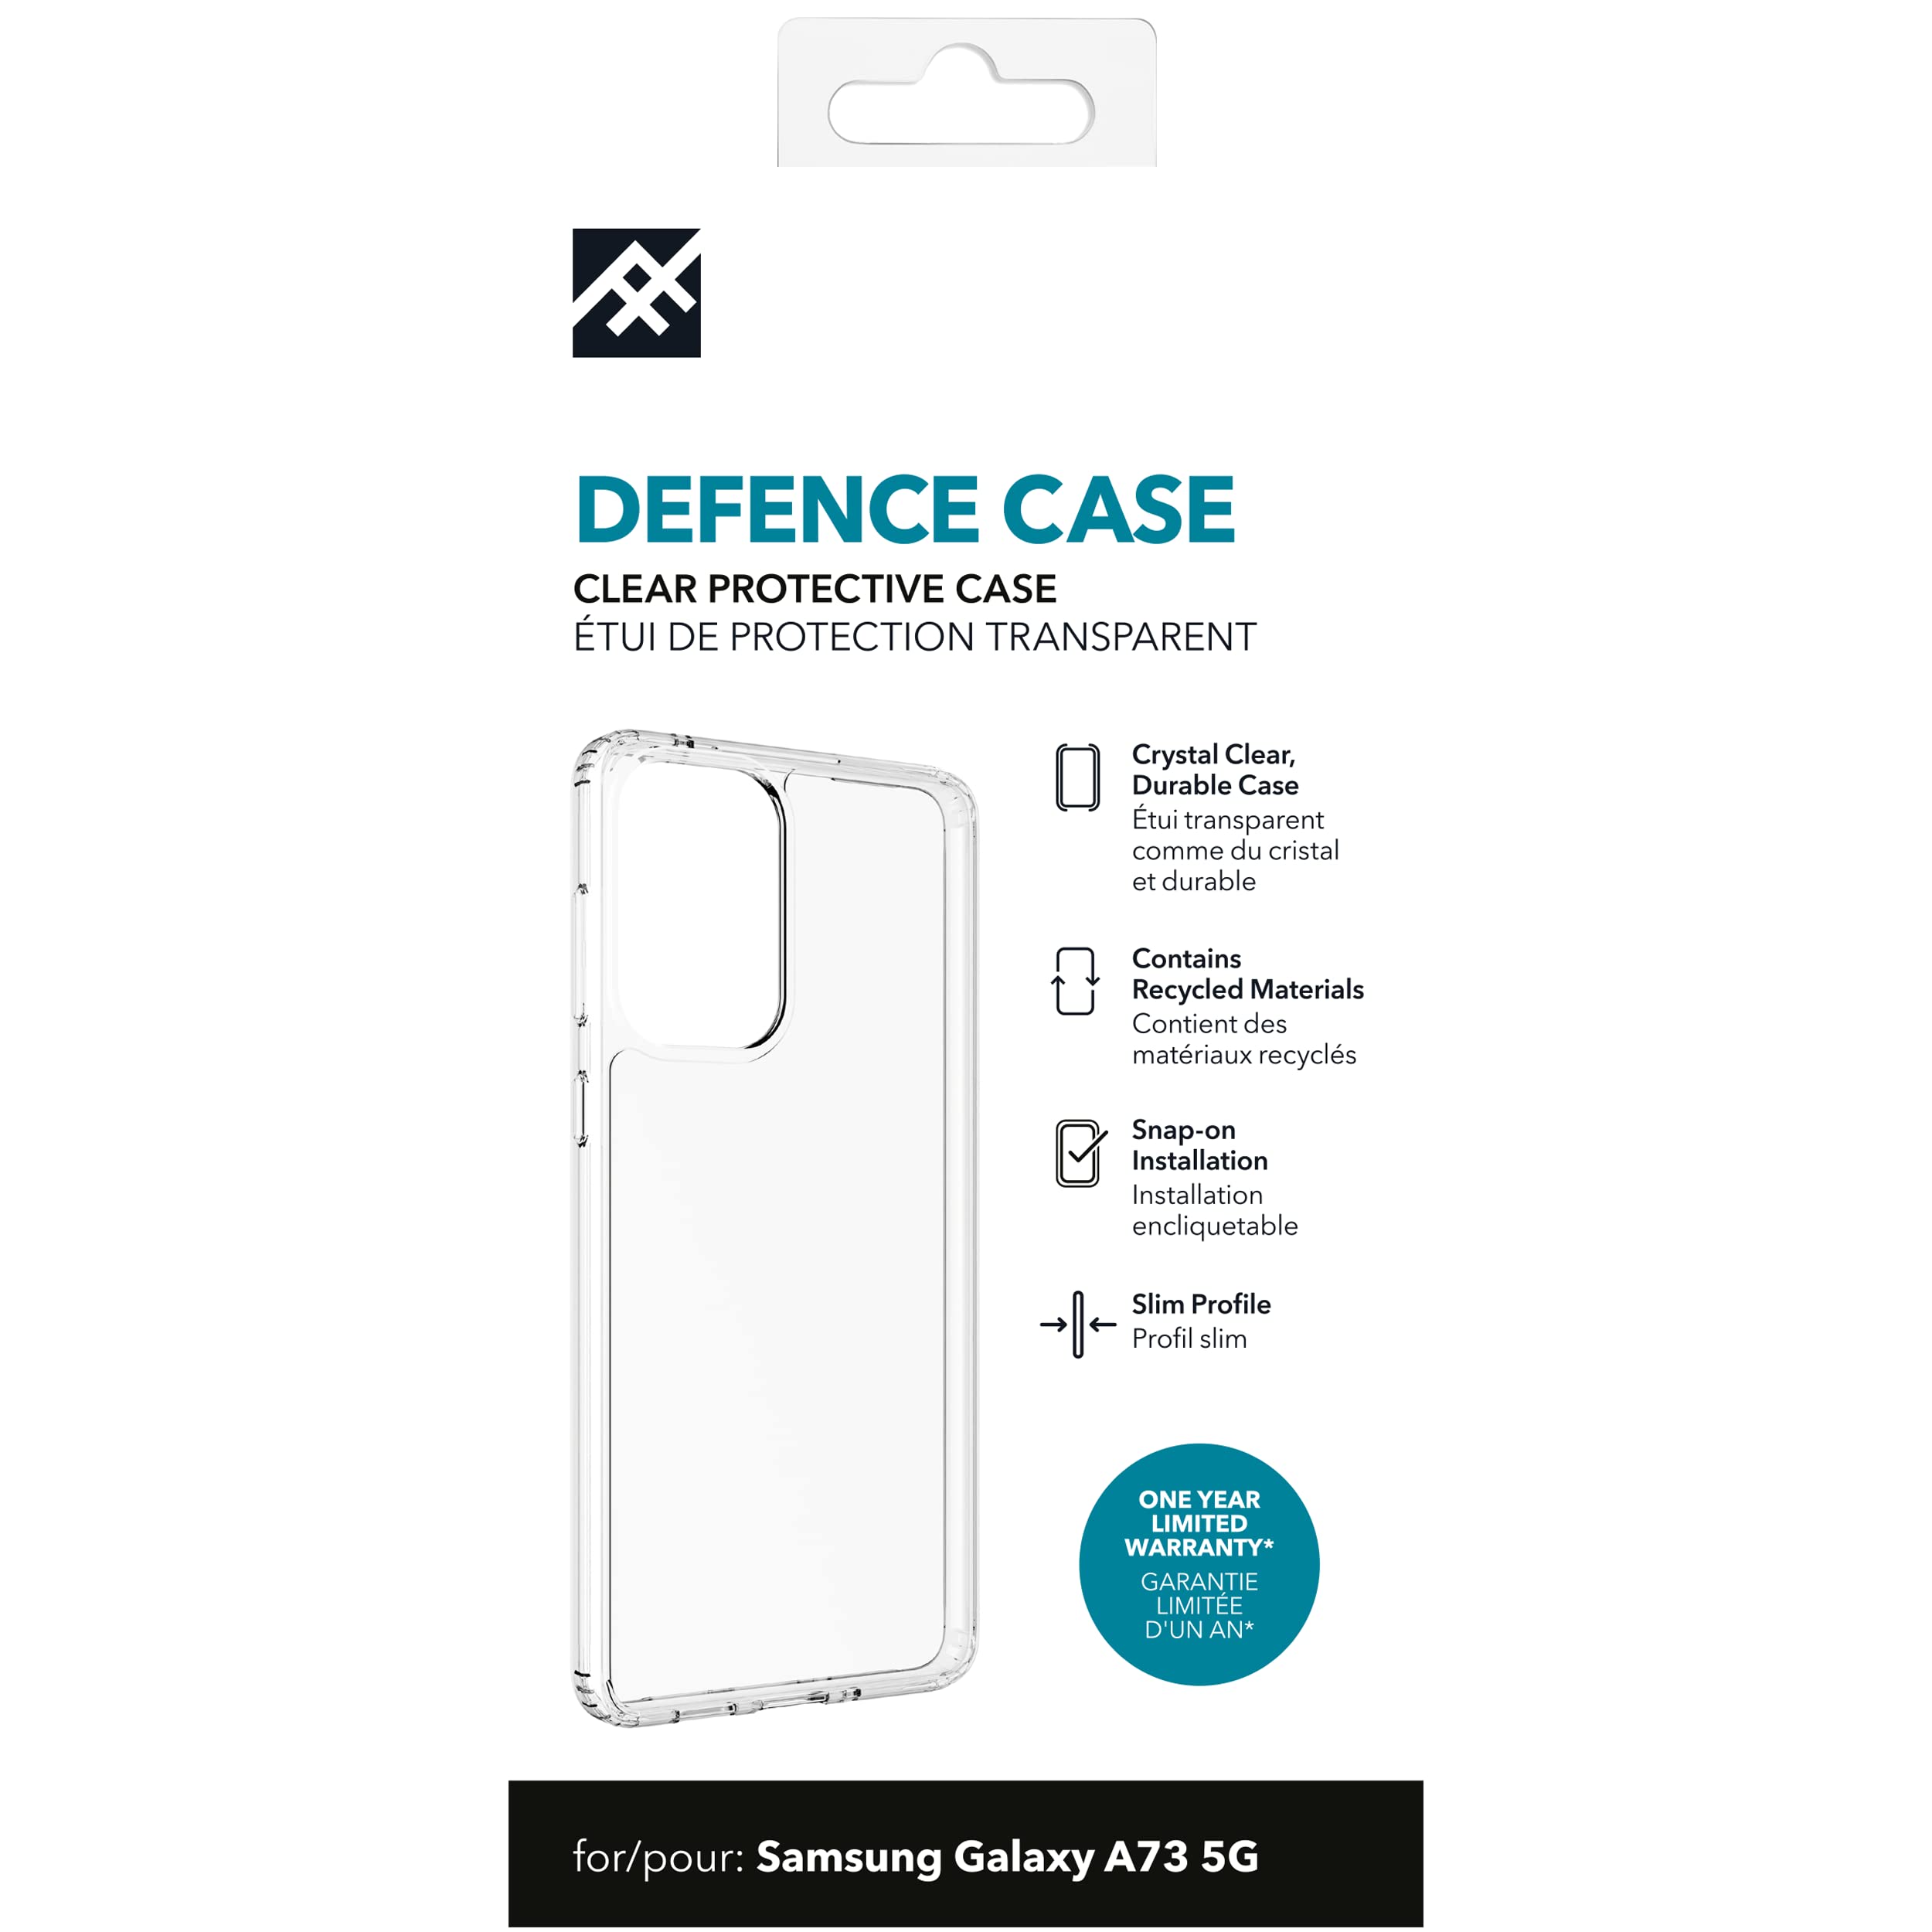 DEFENCE CASE CL SAMSUNG A73